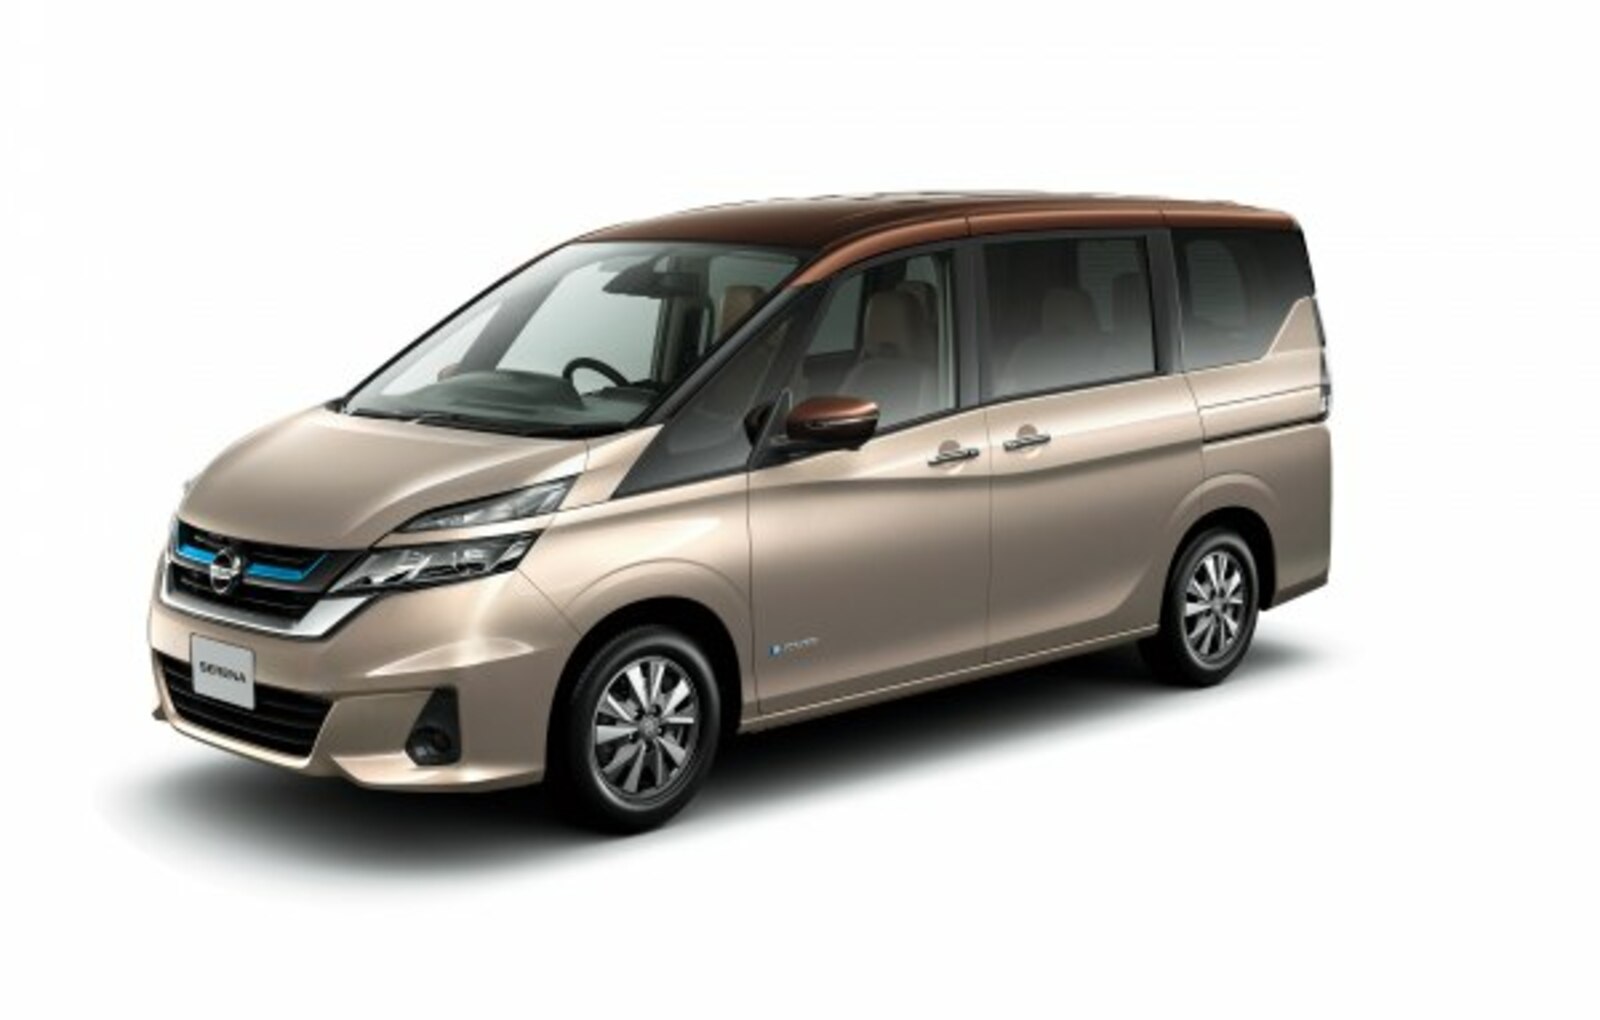 Nissan Serena (C27) Highway Star 2.0 (150 Hp) S-Hybrid CVT 2016, 2017, 2018, 2019, 2020, 2021 